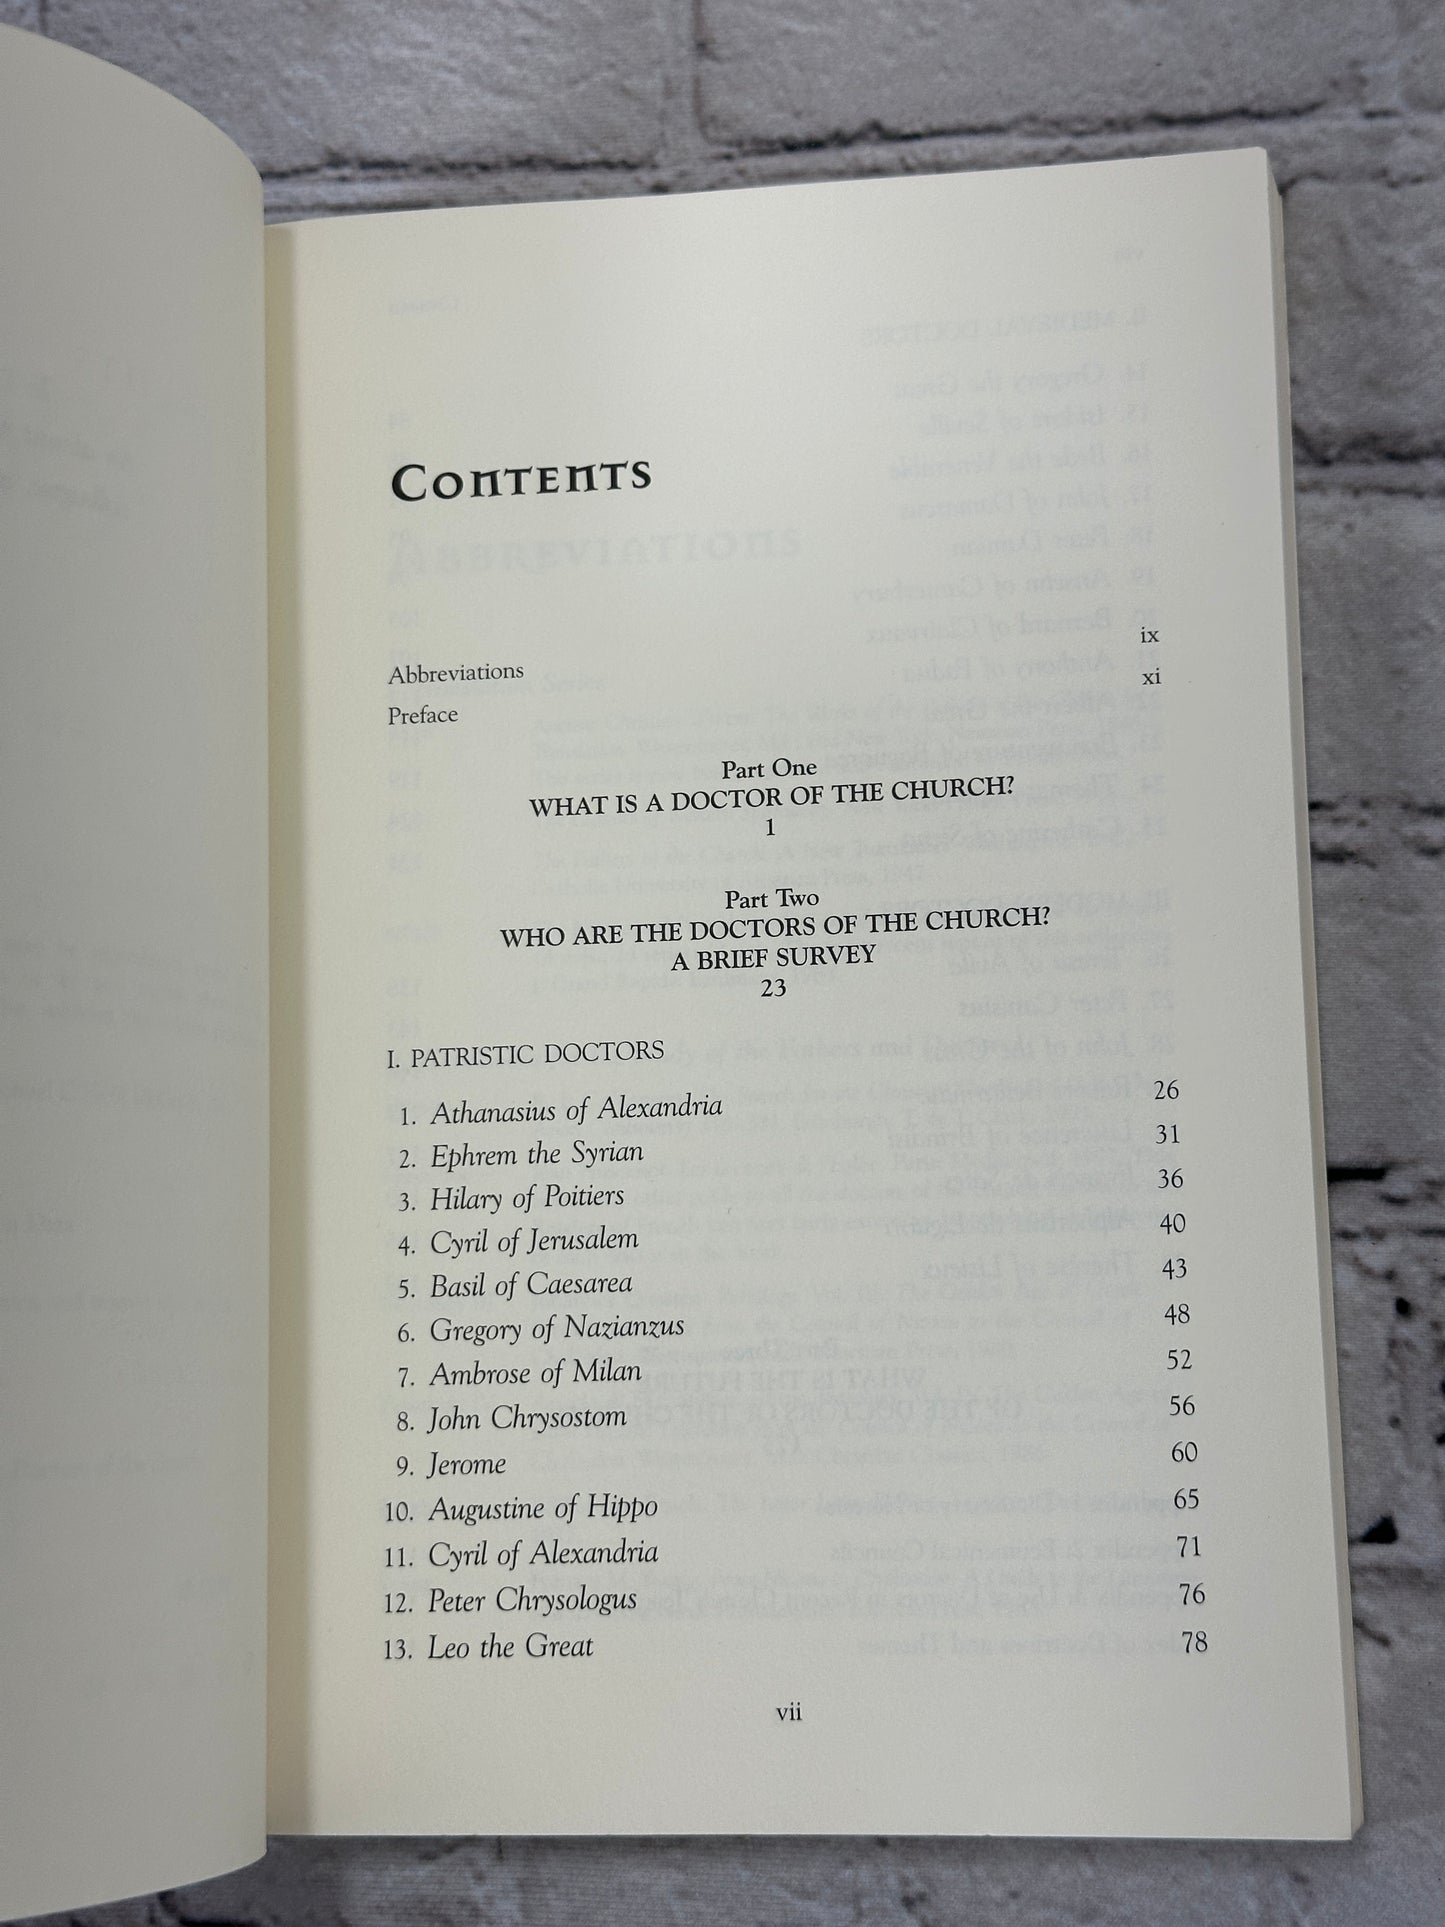 Doctors of the Church by Bernard McGinn [1999 · First Printing]